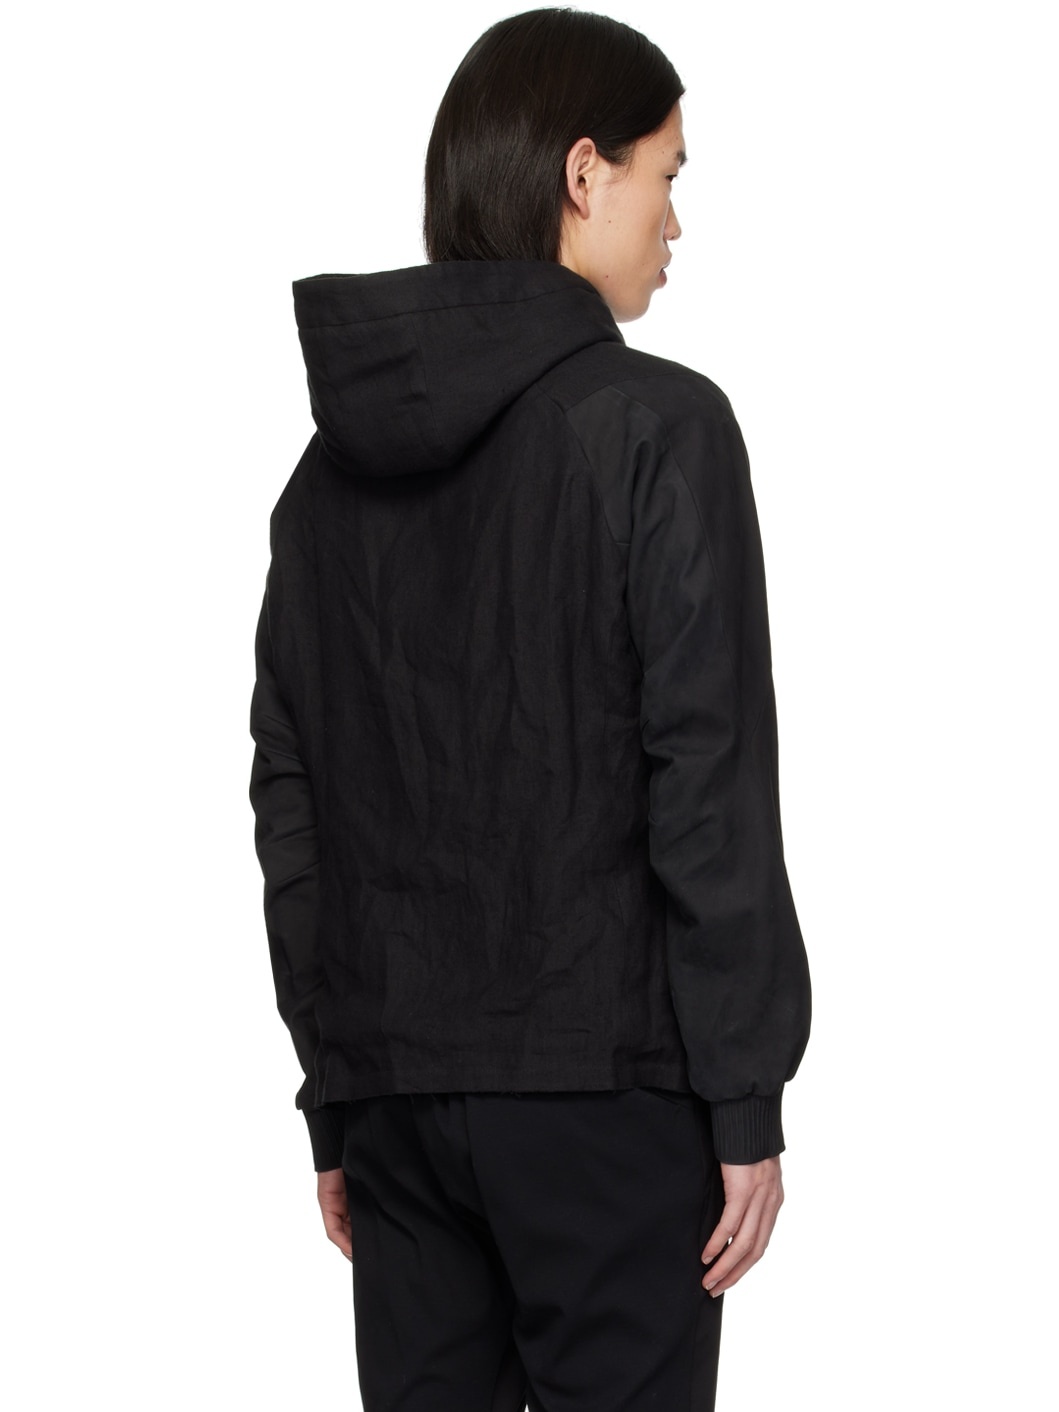 Black Hooded Leather Jacket - 3